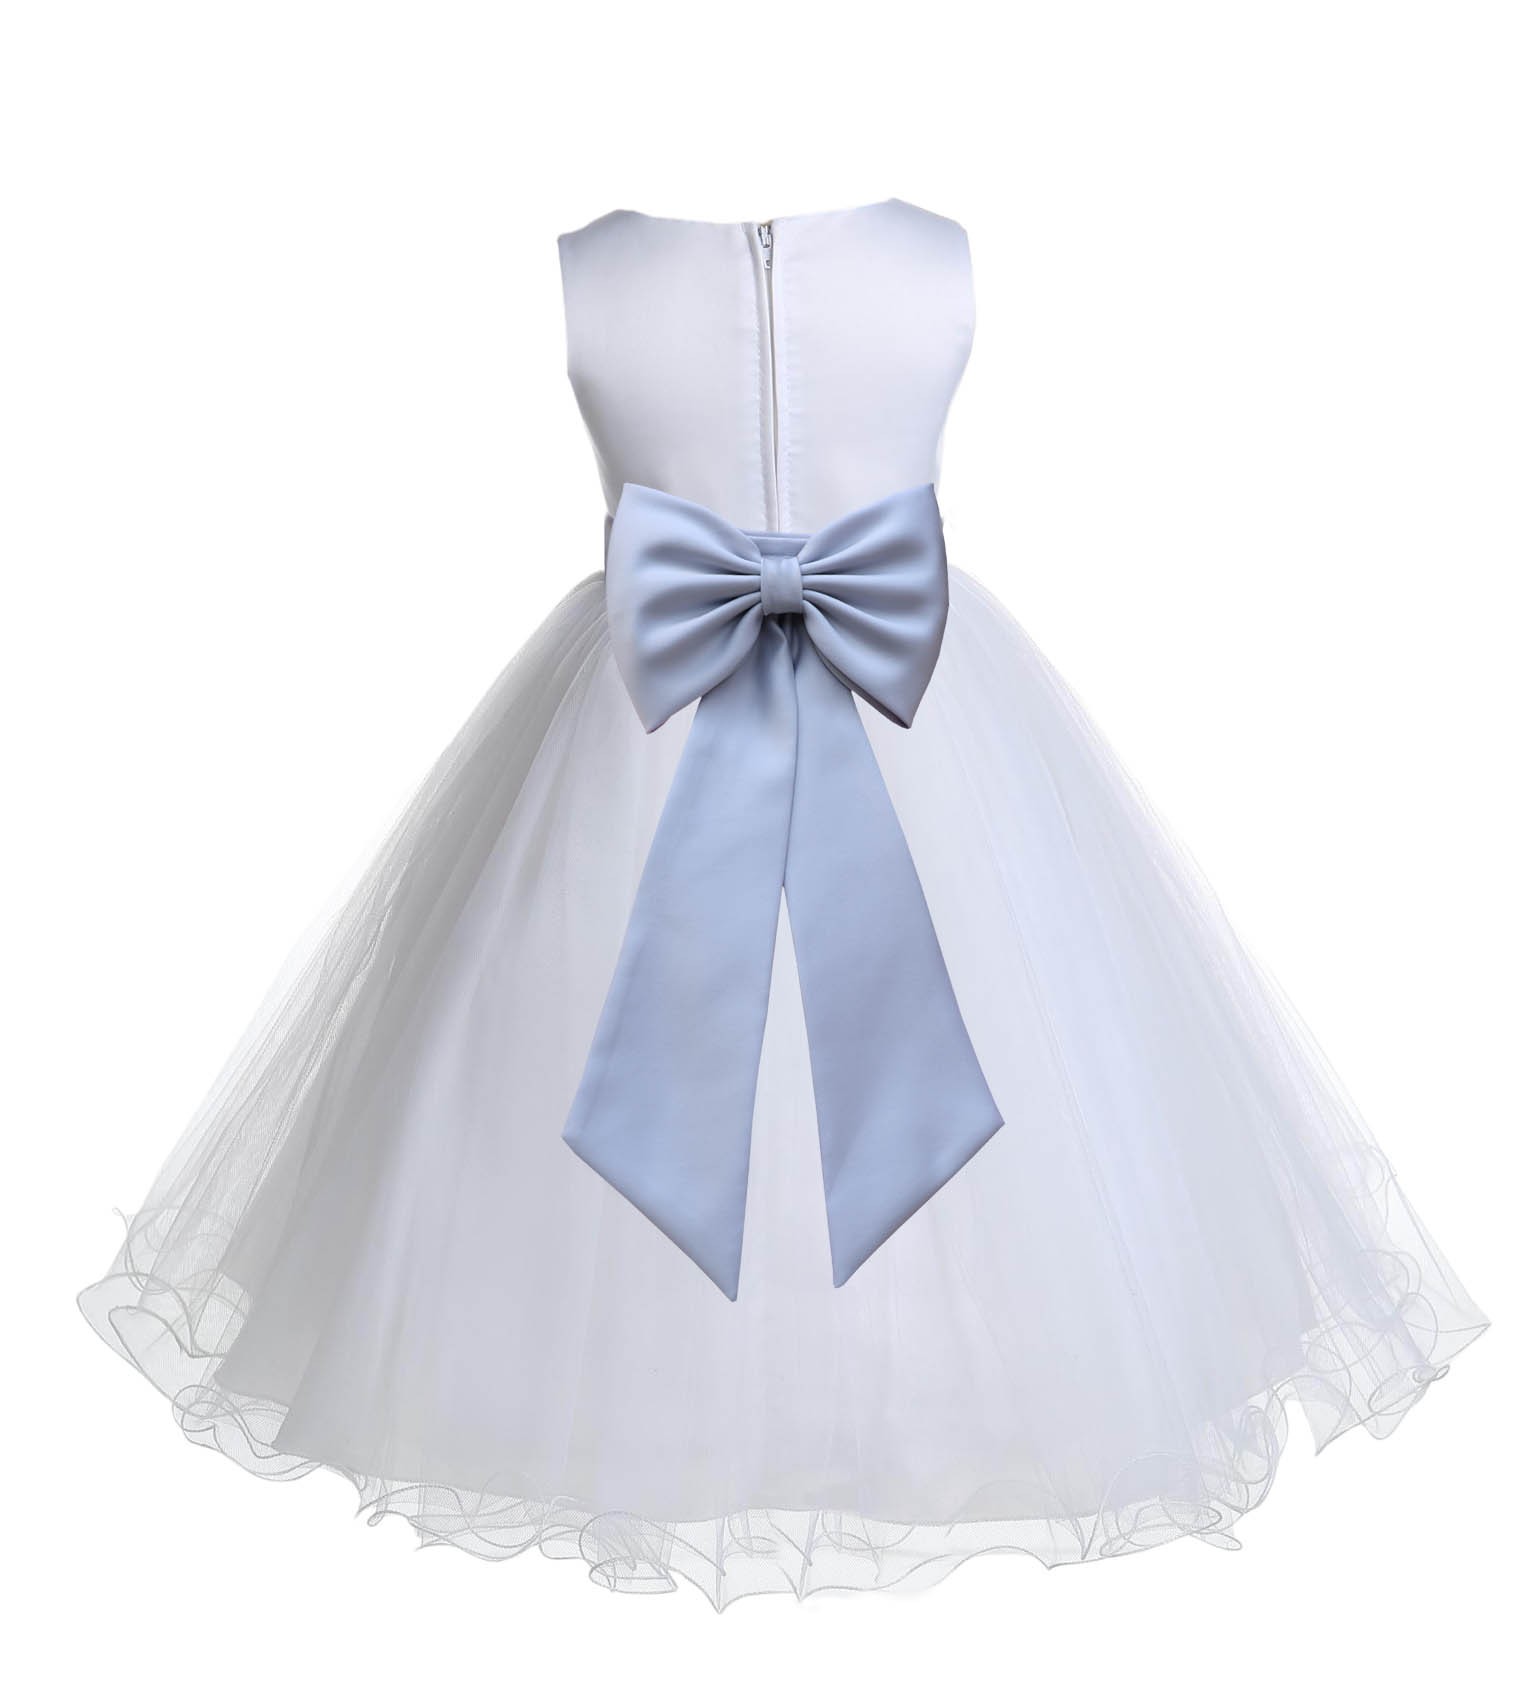 White/Silver Tulle Rattail Edge Flower Girl Dress Wedding Bridesmaid 829T